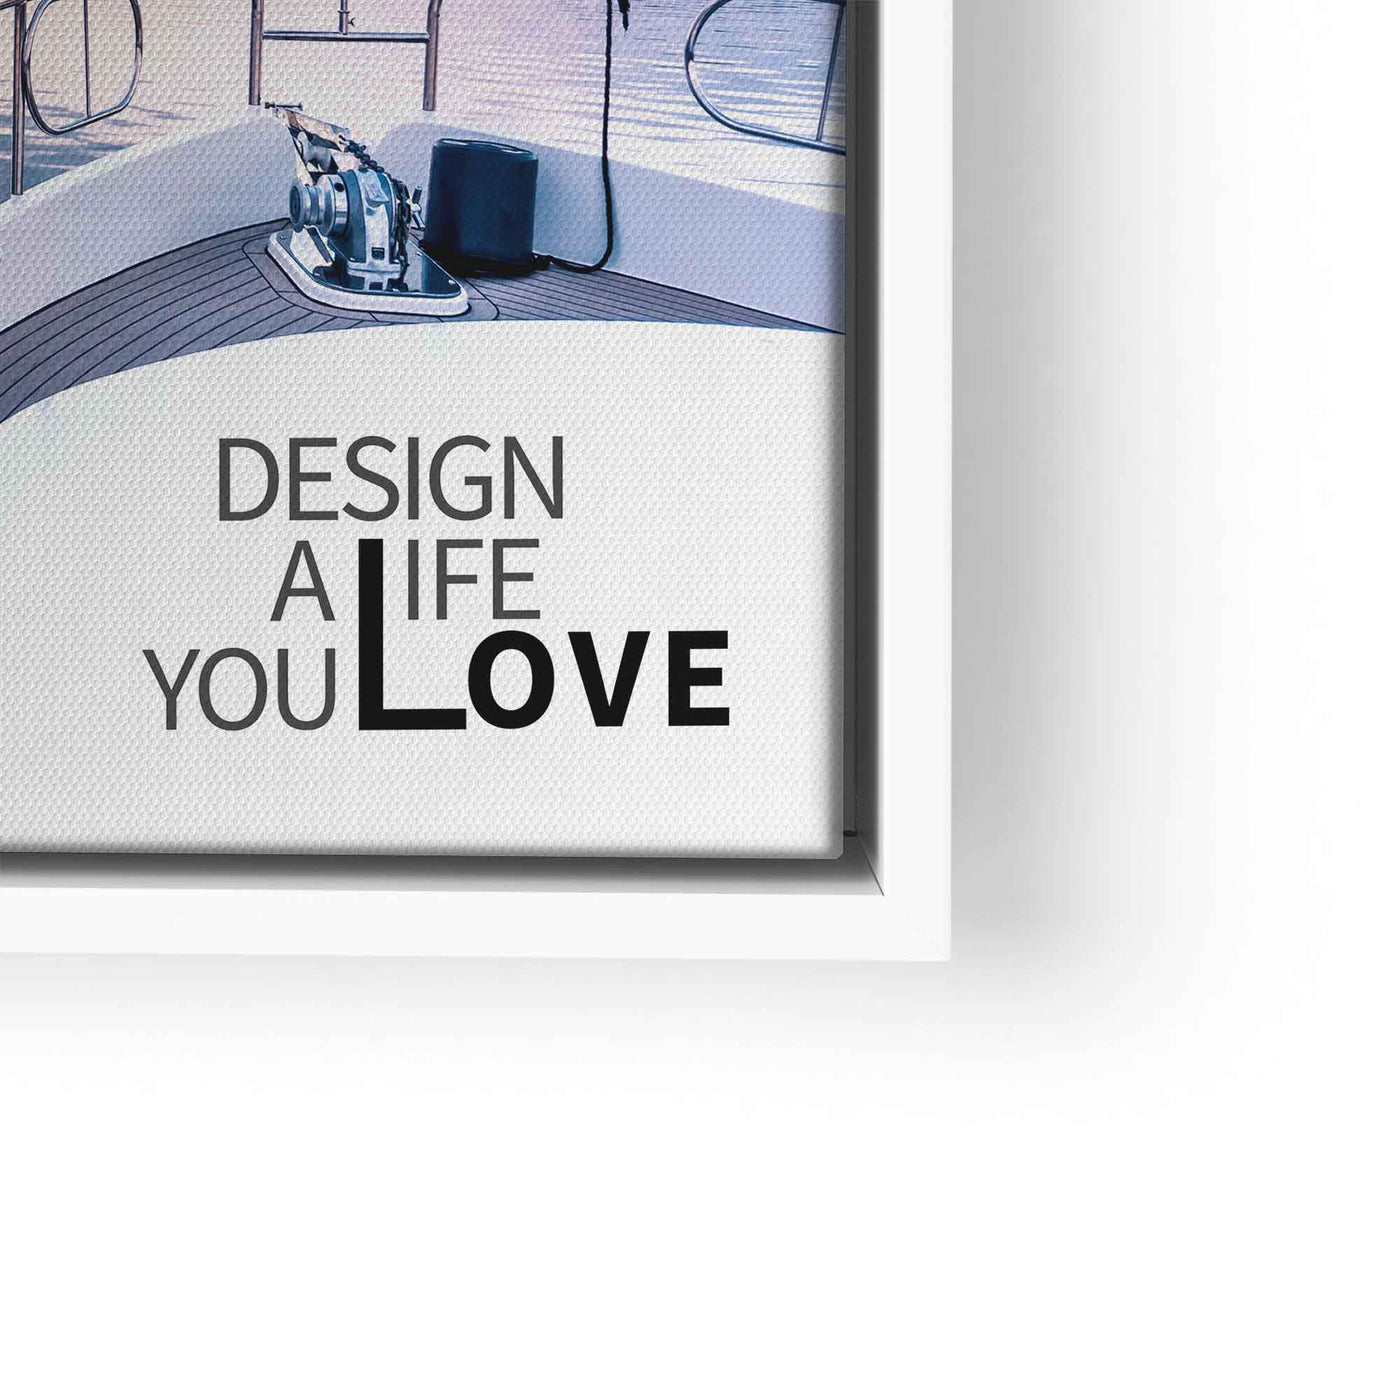 Design a life you love